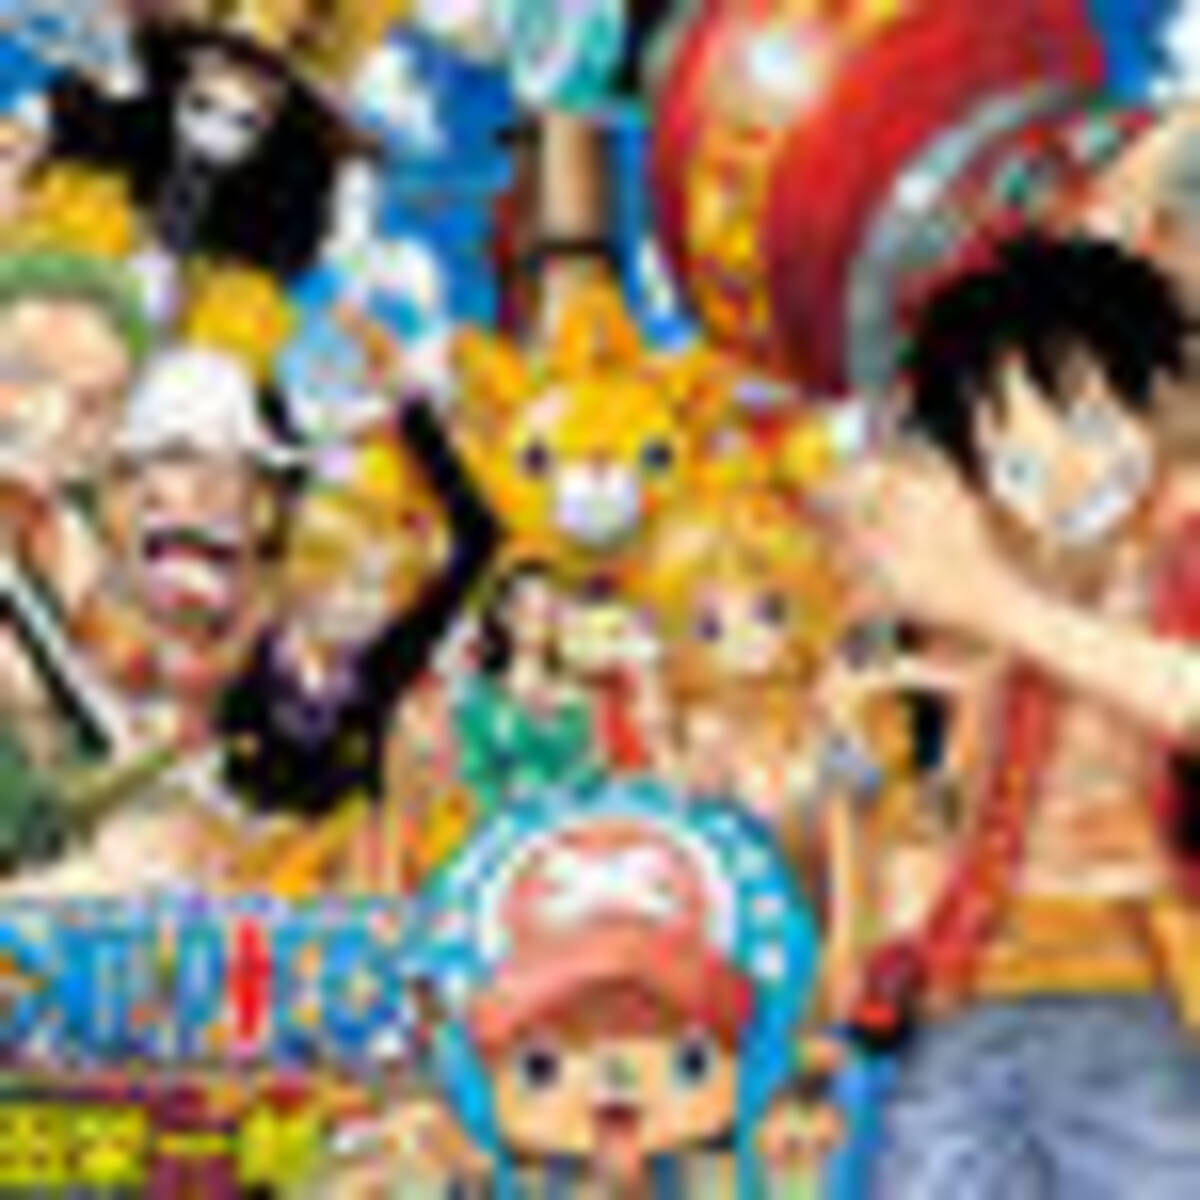 One Piece ナミの正体は古代兵器 ウラヌス 衝撃的な噂にファンがざわつく 年10月18日 エキサイトニュース